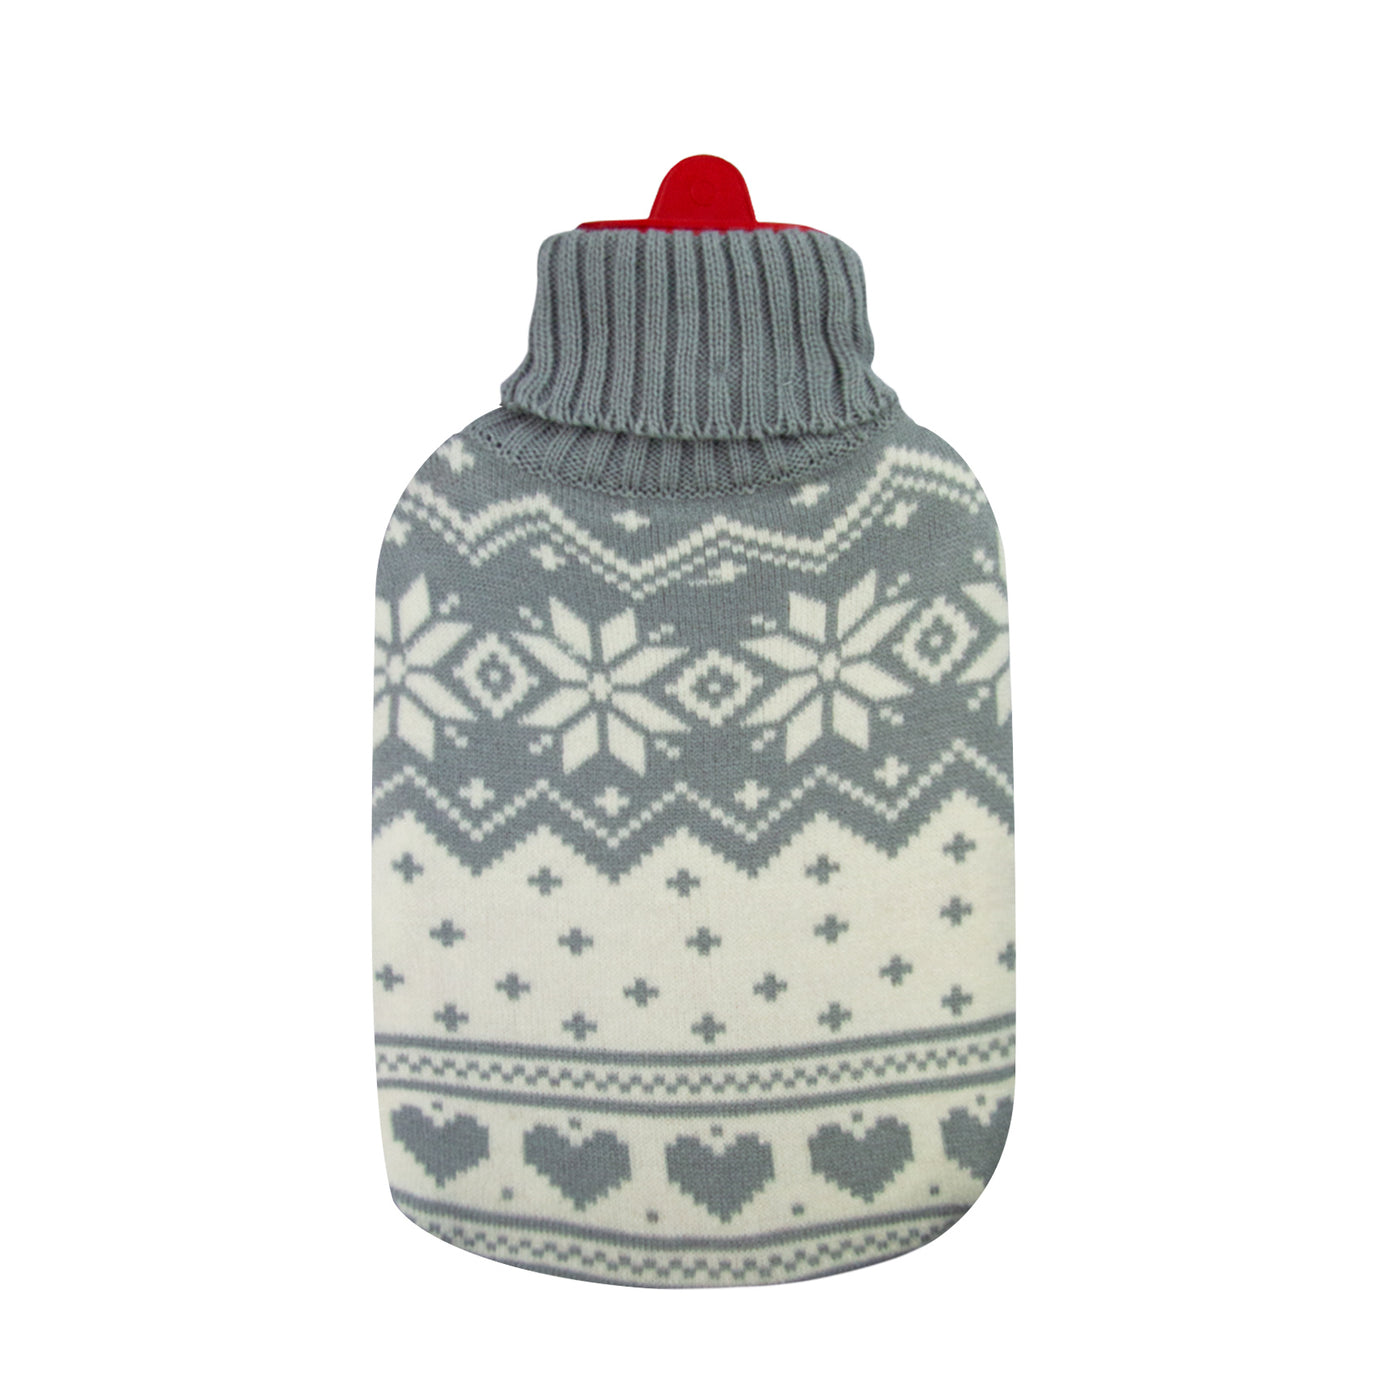 Hot Water Bottle & Cover - Cream Arctic - The Grain Shop Online Store